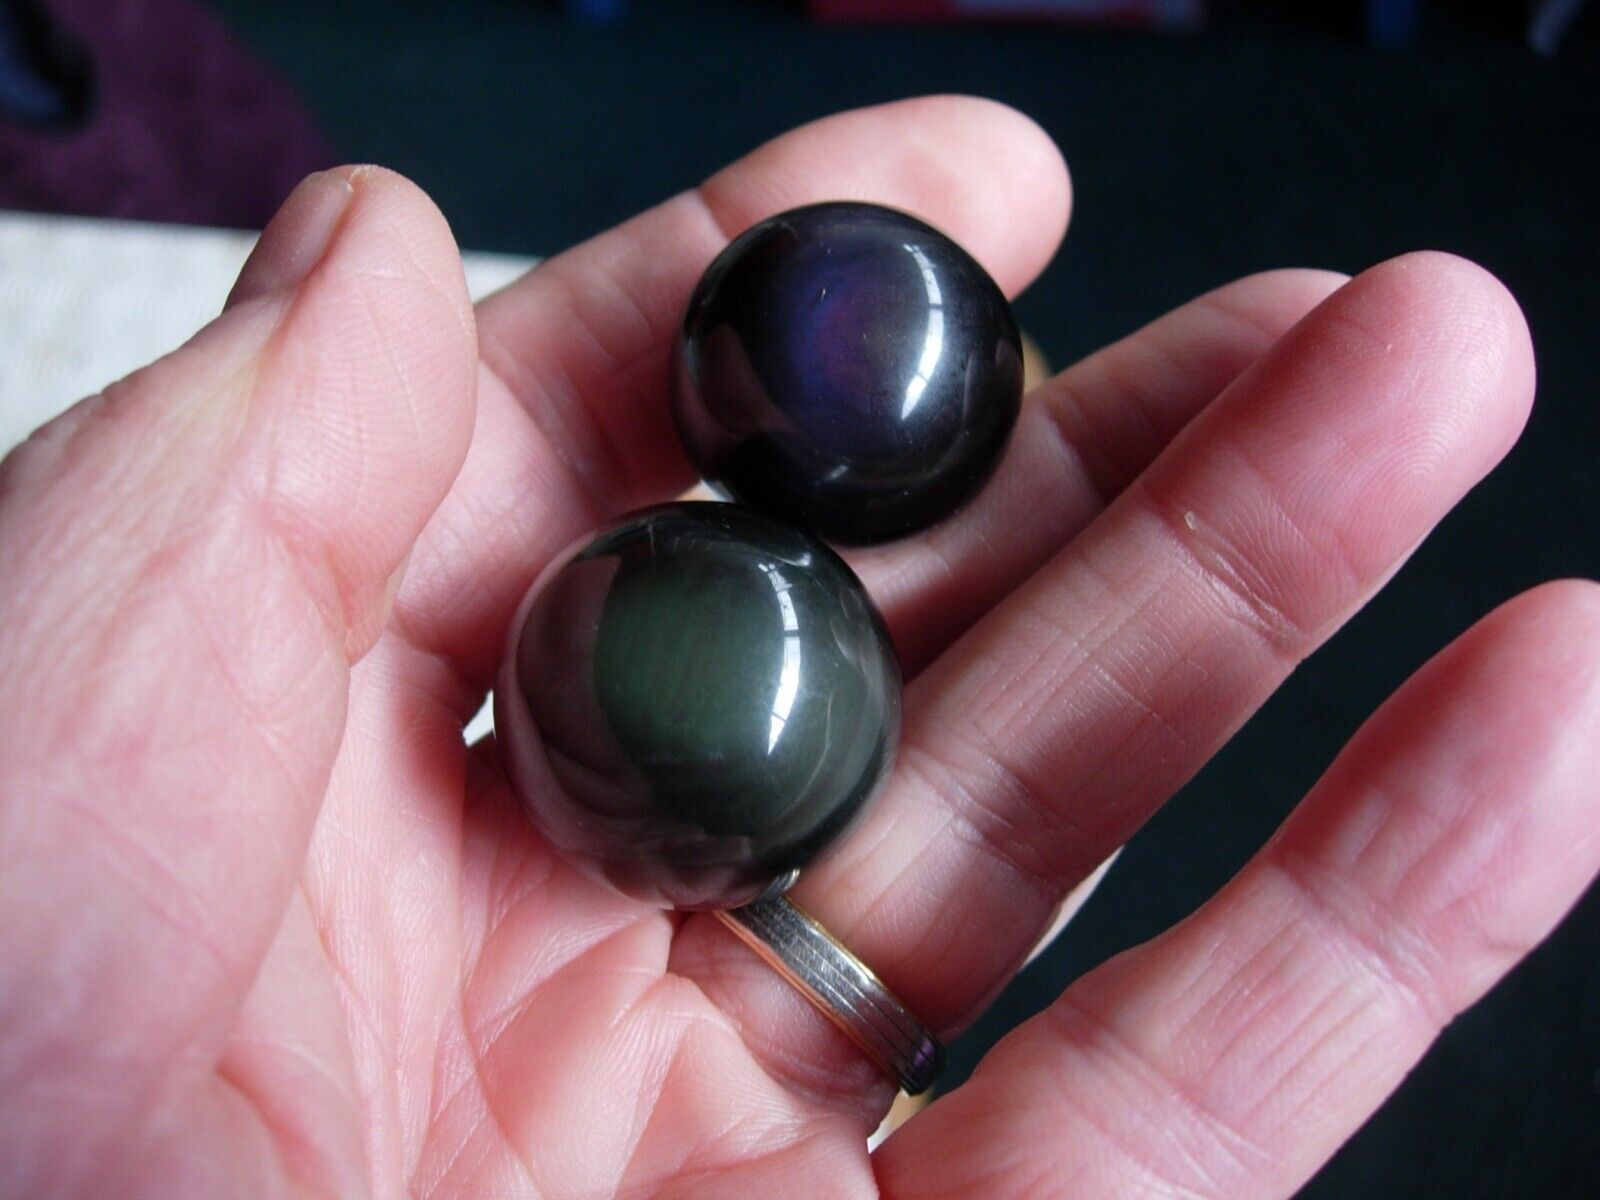 rainbow obsidian spheres set of 10 eBay U.K. seller for over 20 years